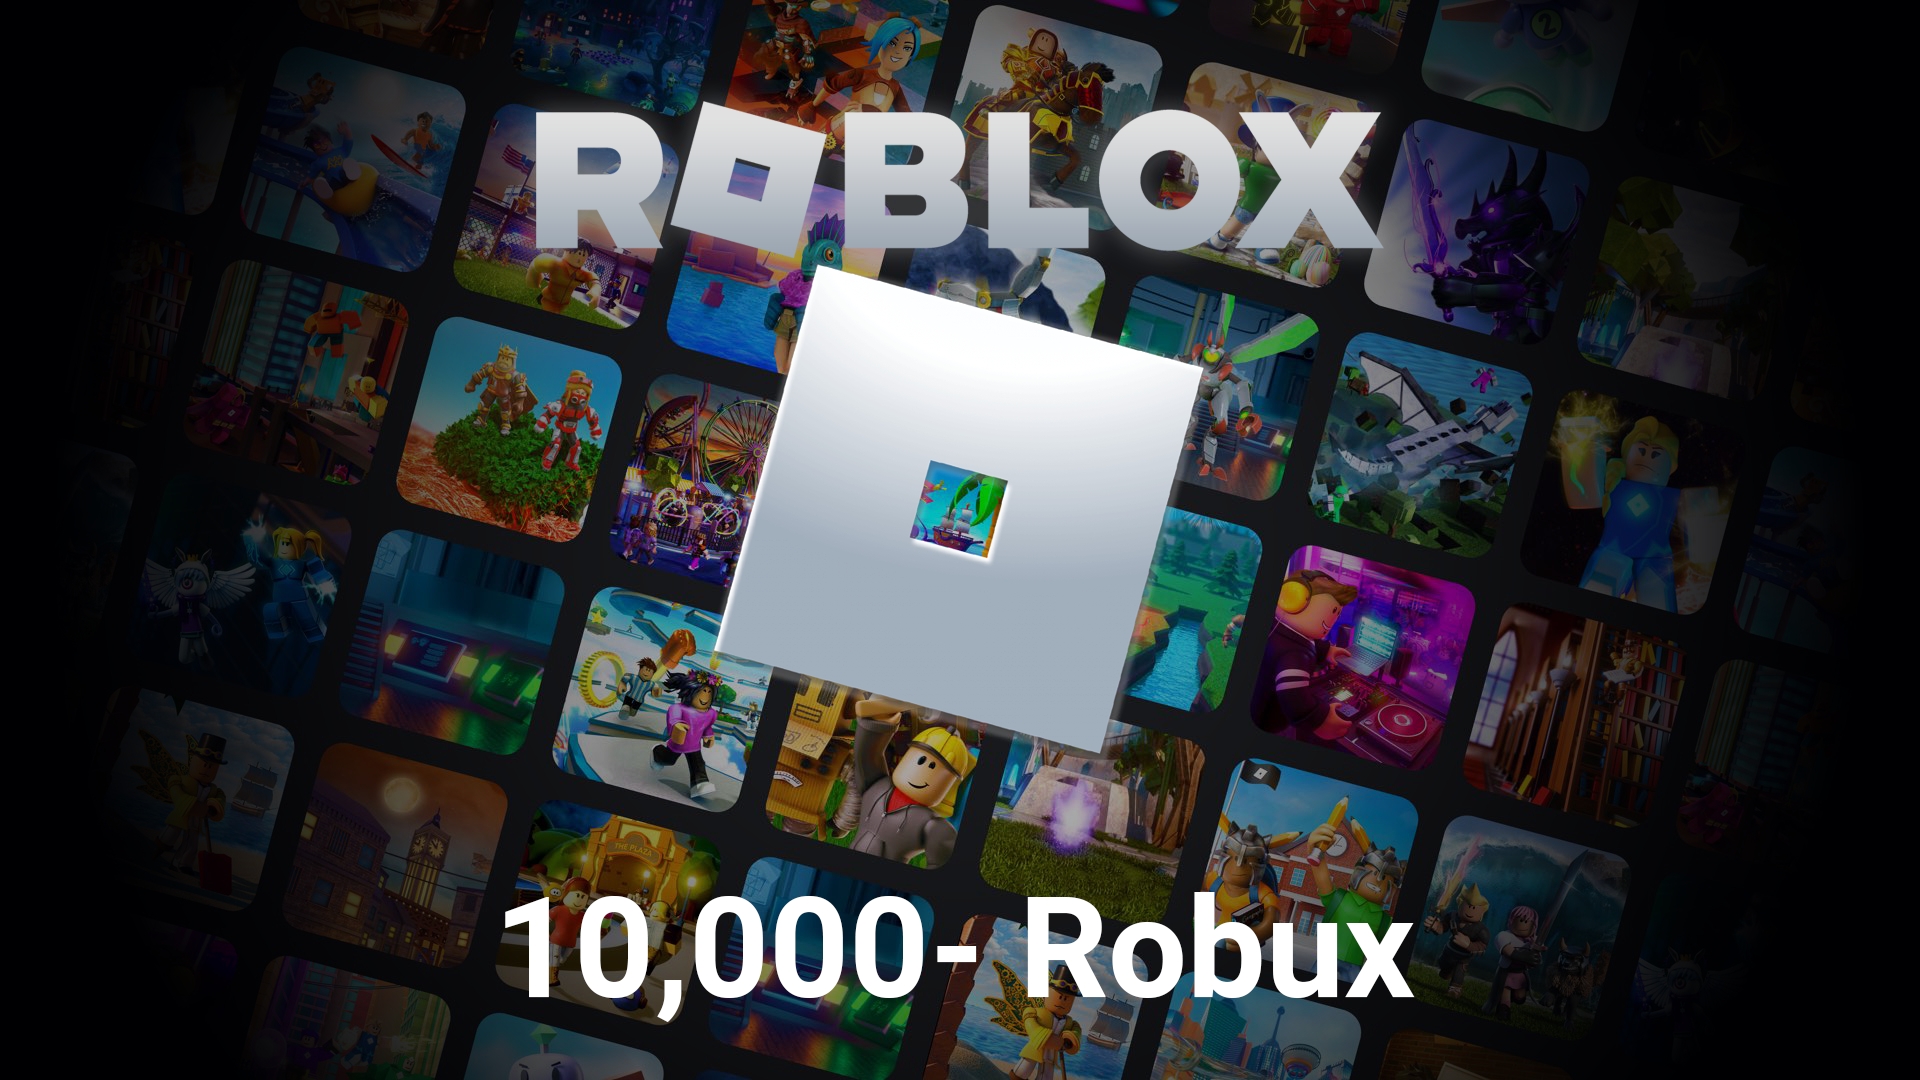 Robux - Roblox